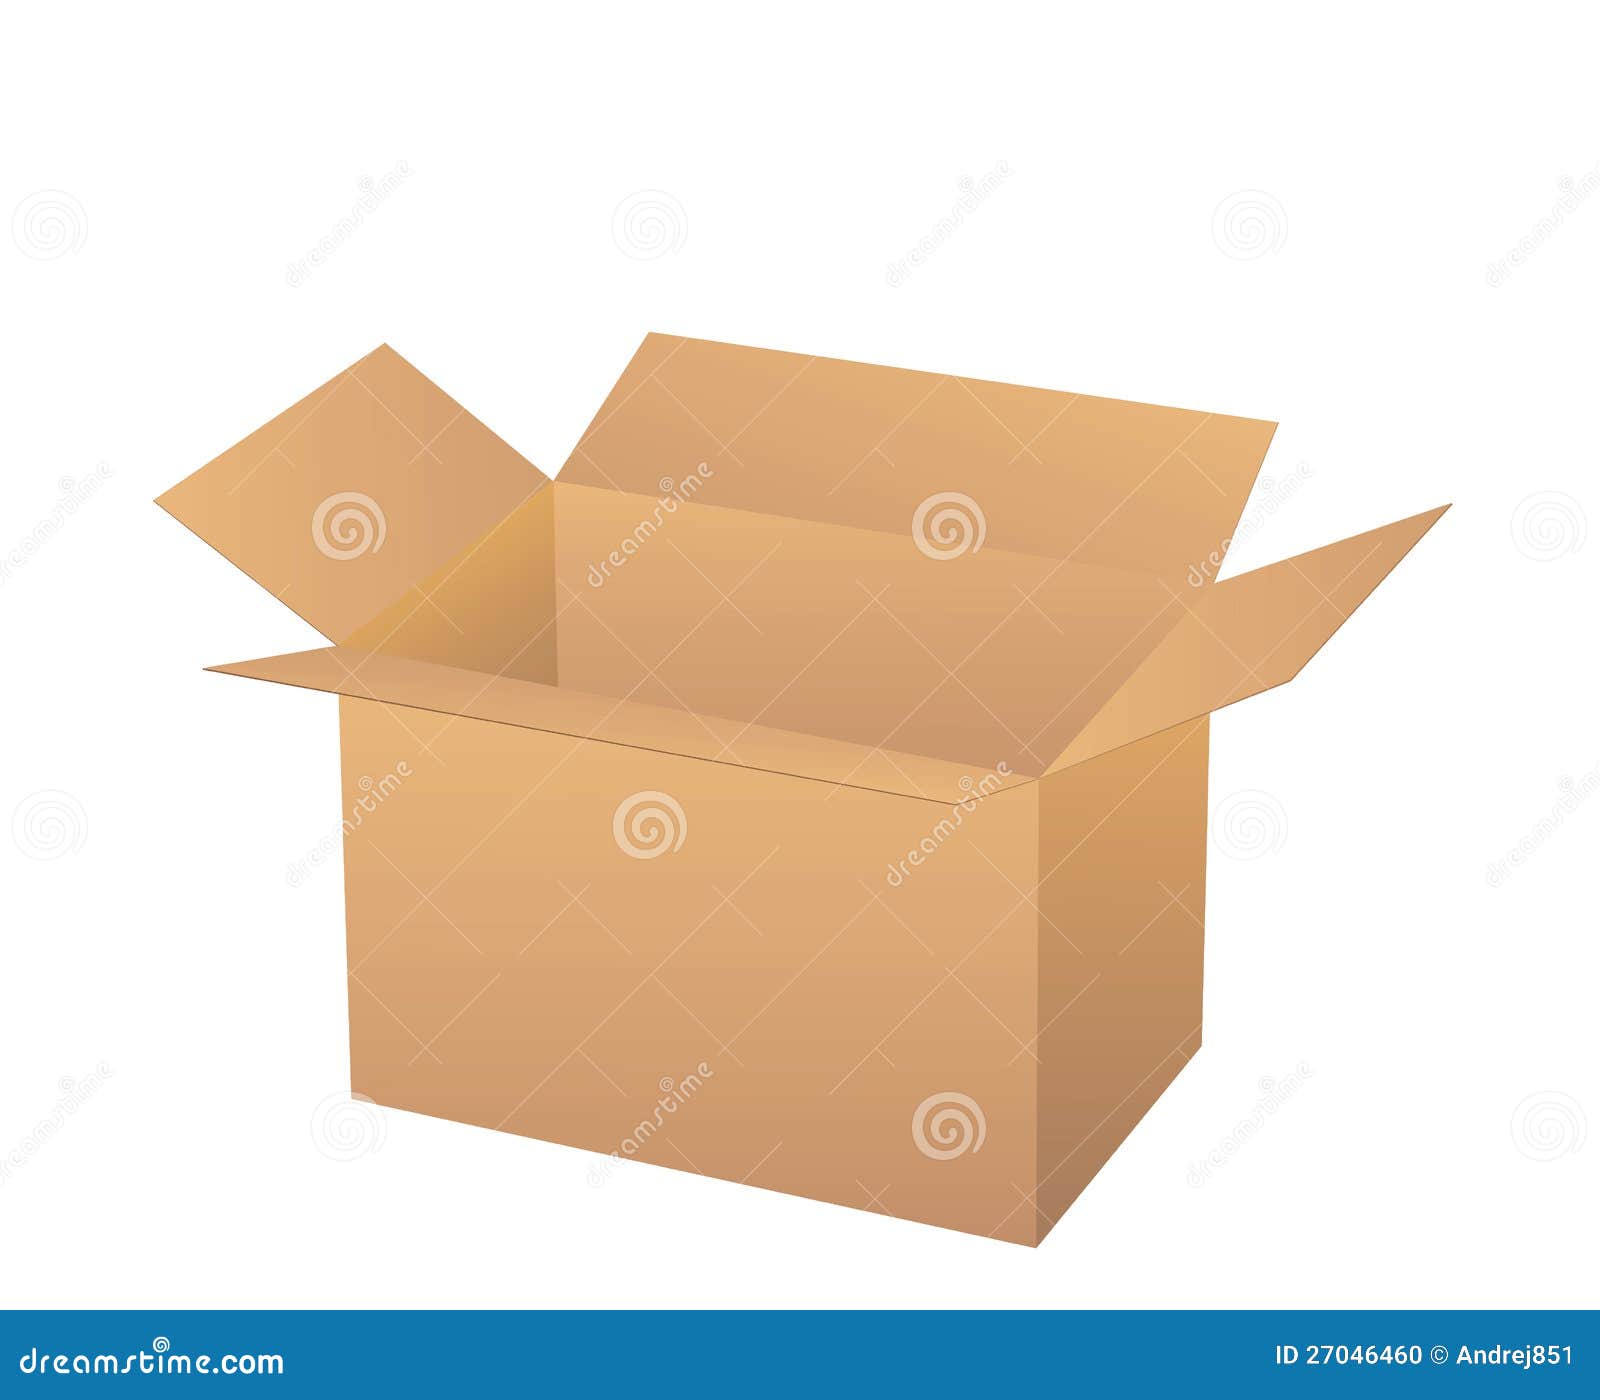 Cardboard box. stock illustration. Illustration of real - 27046460